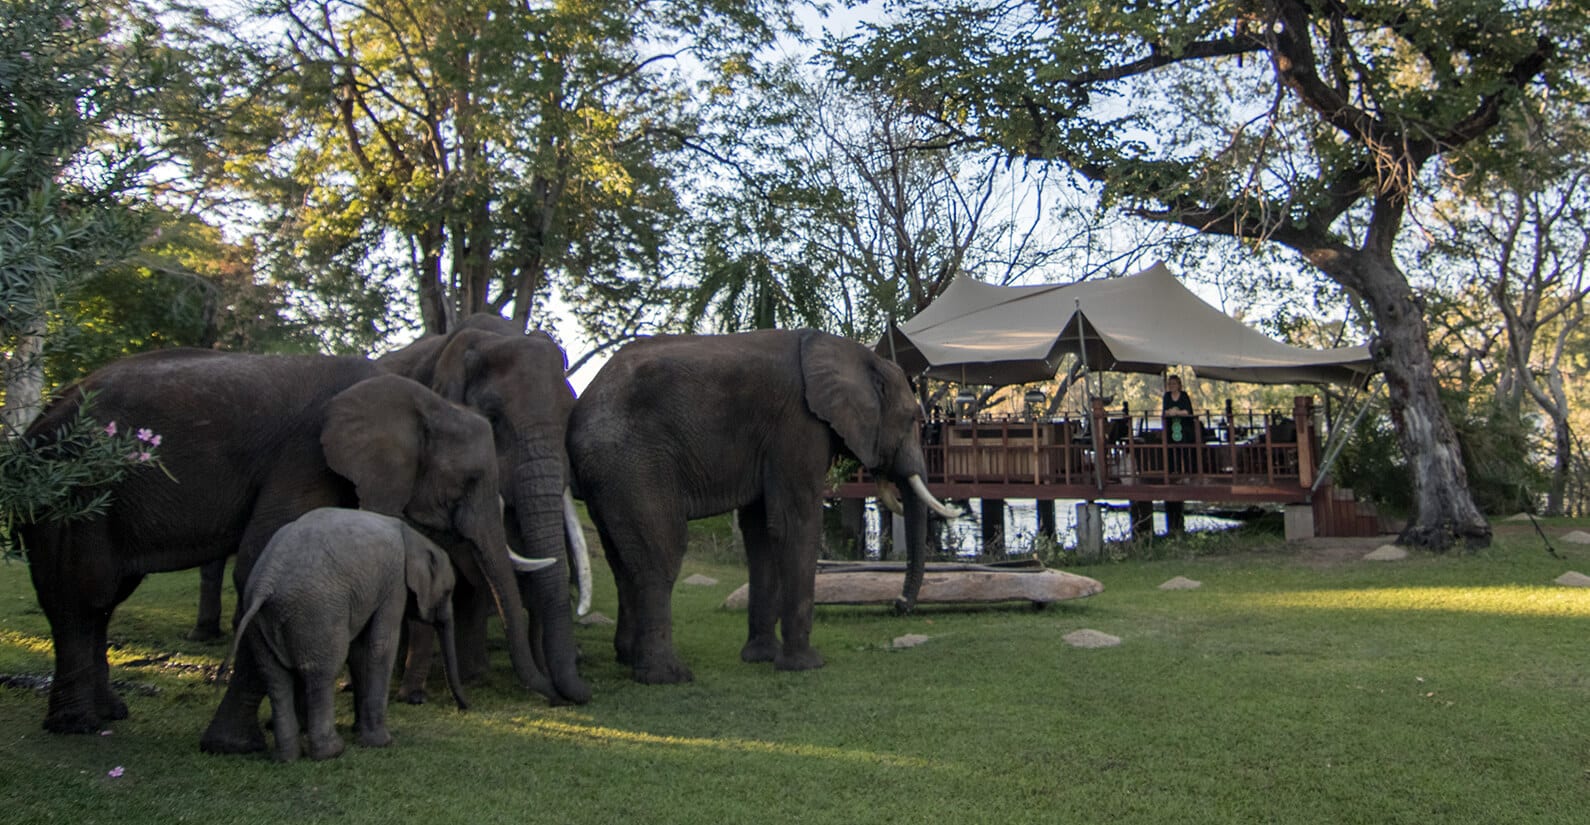 The local herd outside Elephant Café.